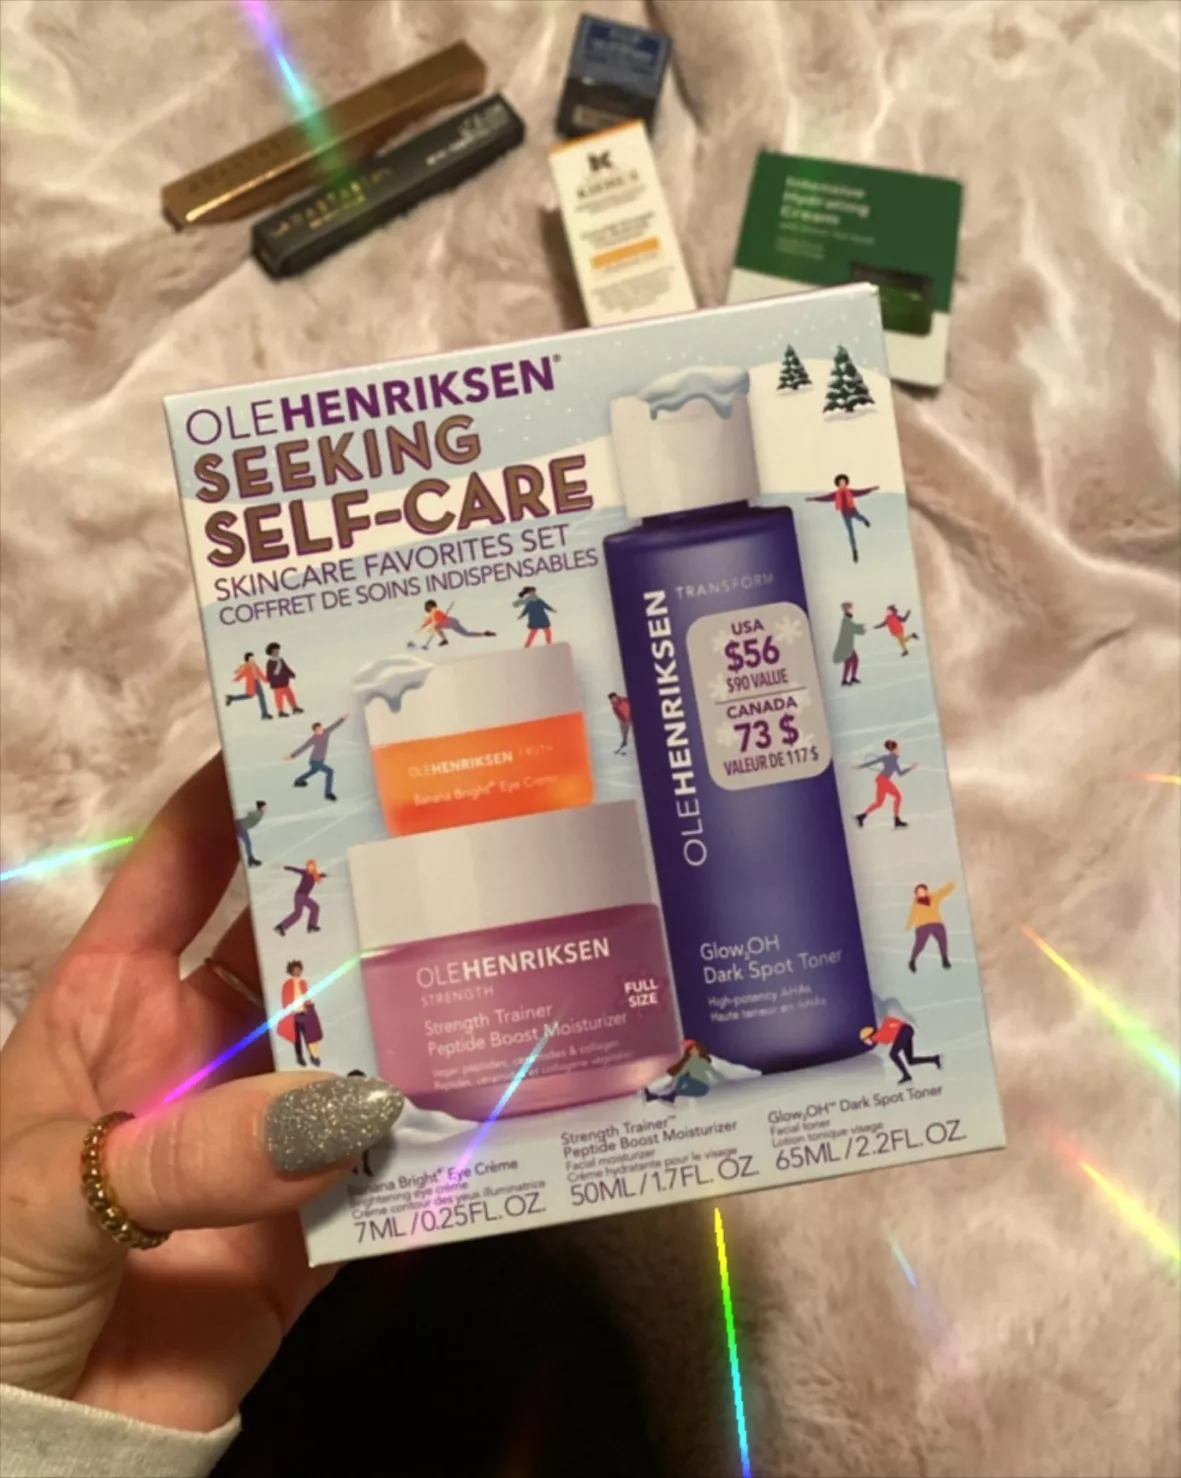 Ole Henriksen Seeking Self-Care Skincare Favorites Set